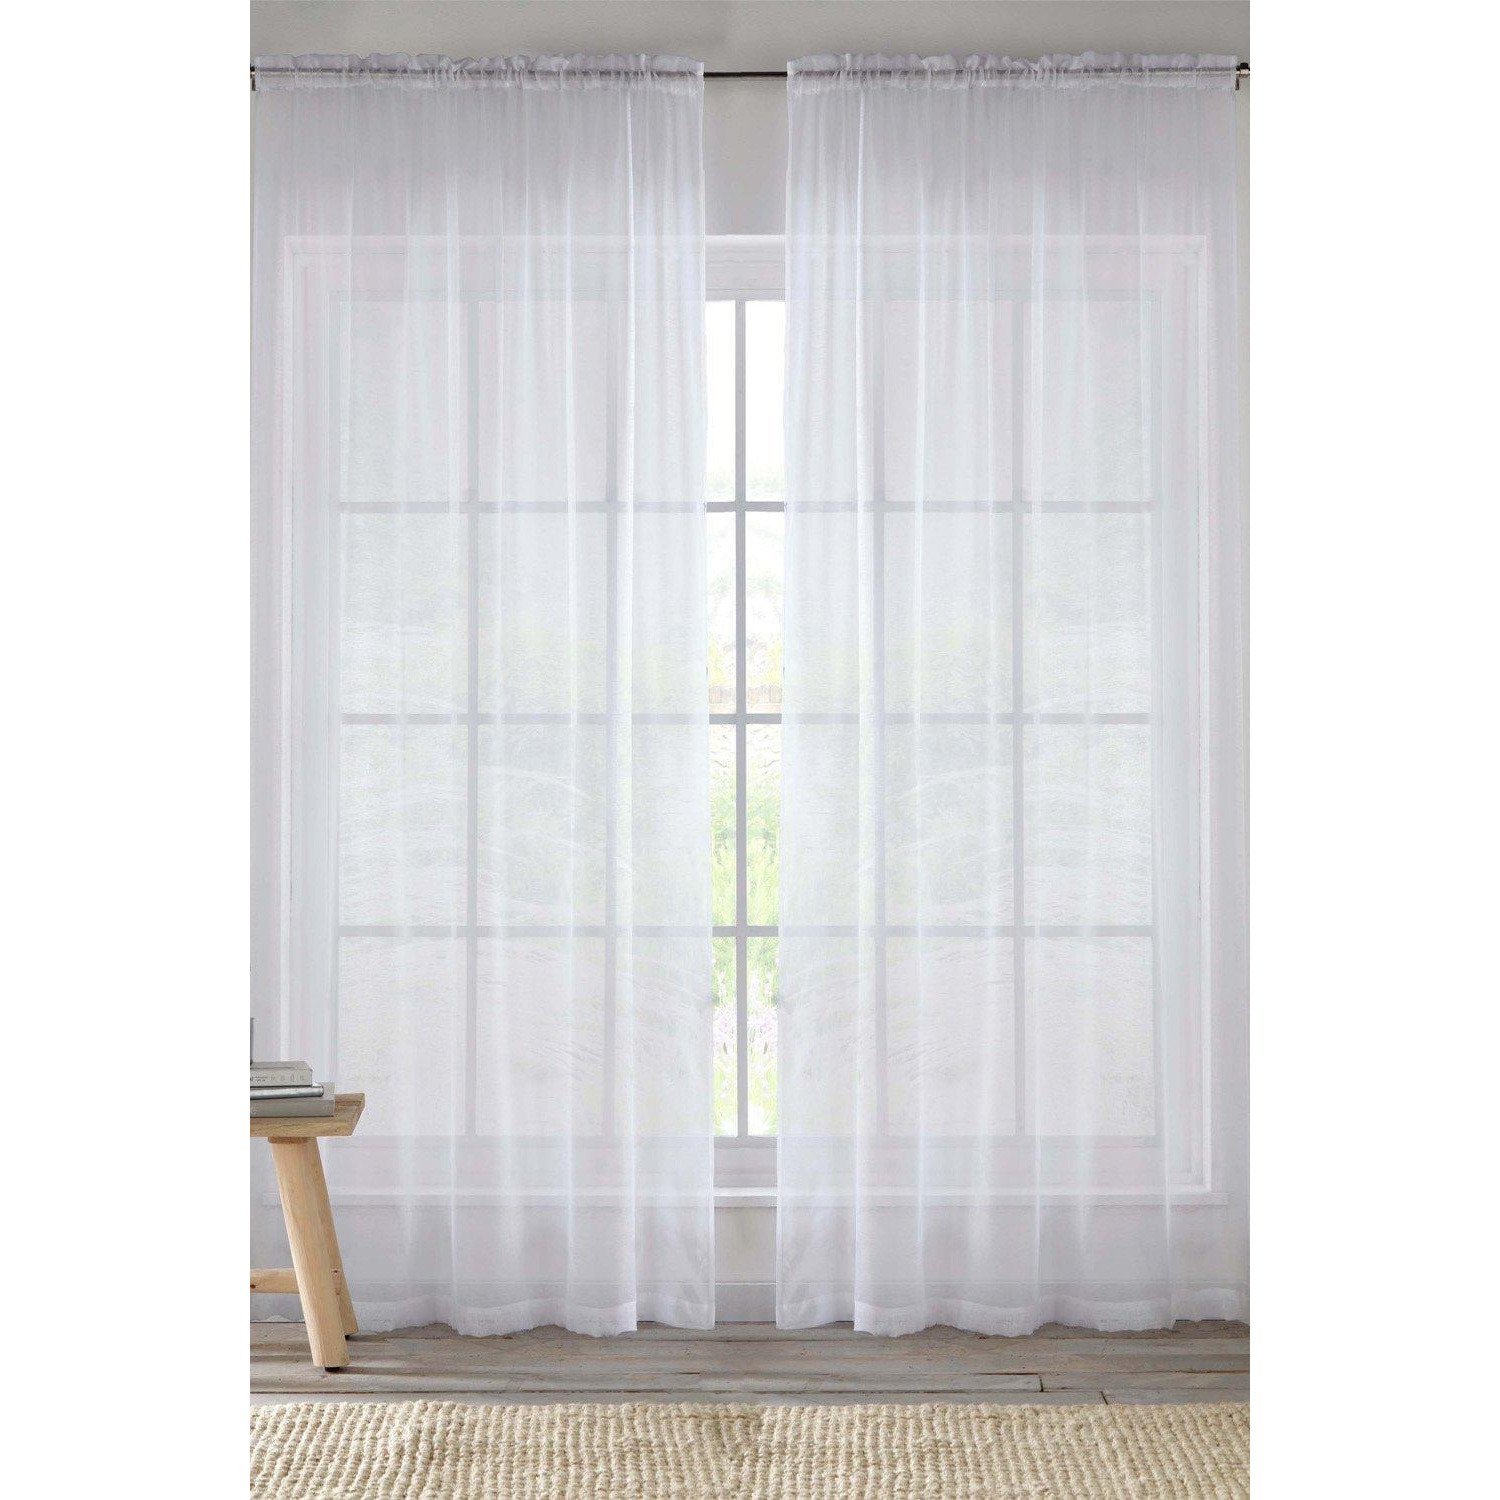 Sheer Plain Woven Voile Slot Top Curtain Panel Pair - image 1